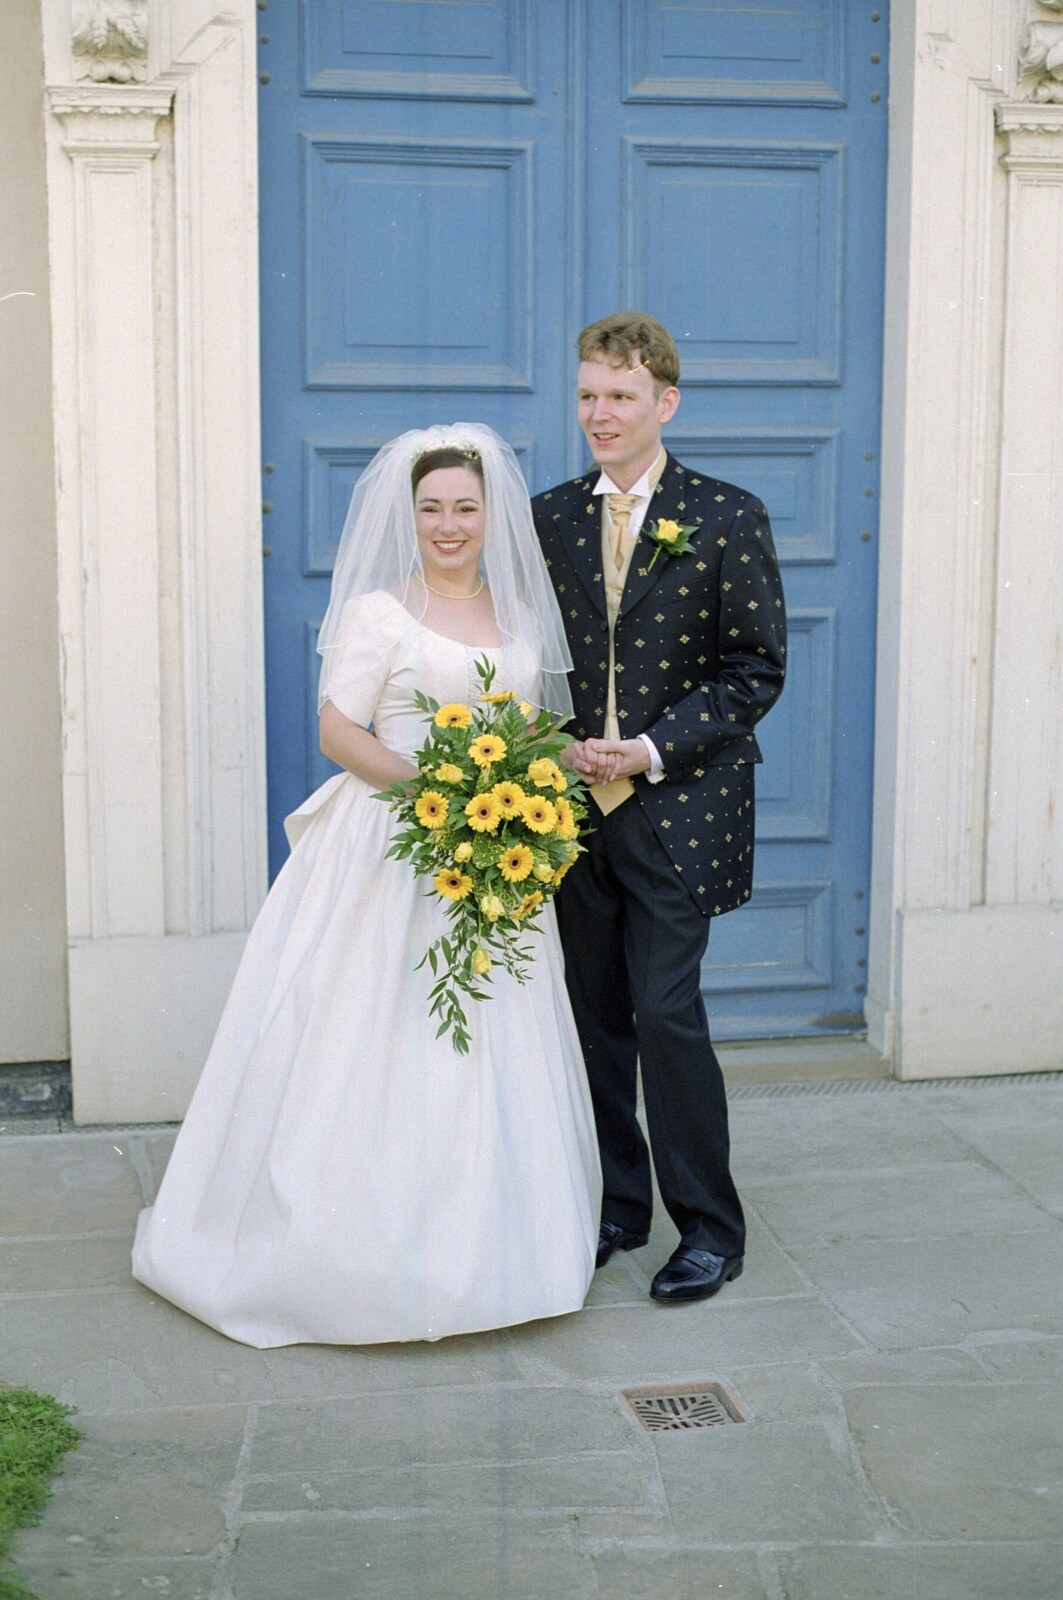 Lesley and Joe from Joe and Lesley's CISU Wedding, Ipswich, Suffolk - 30th July 1998